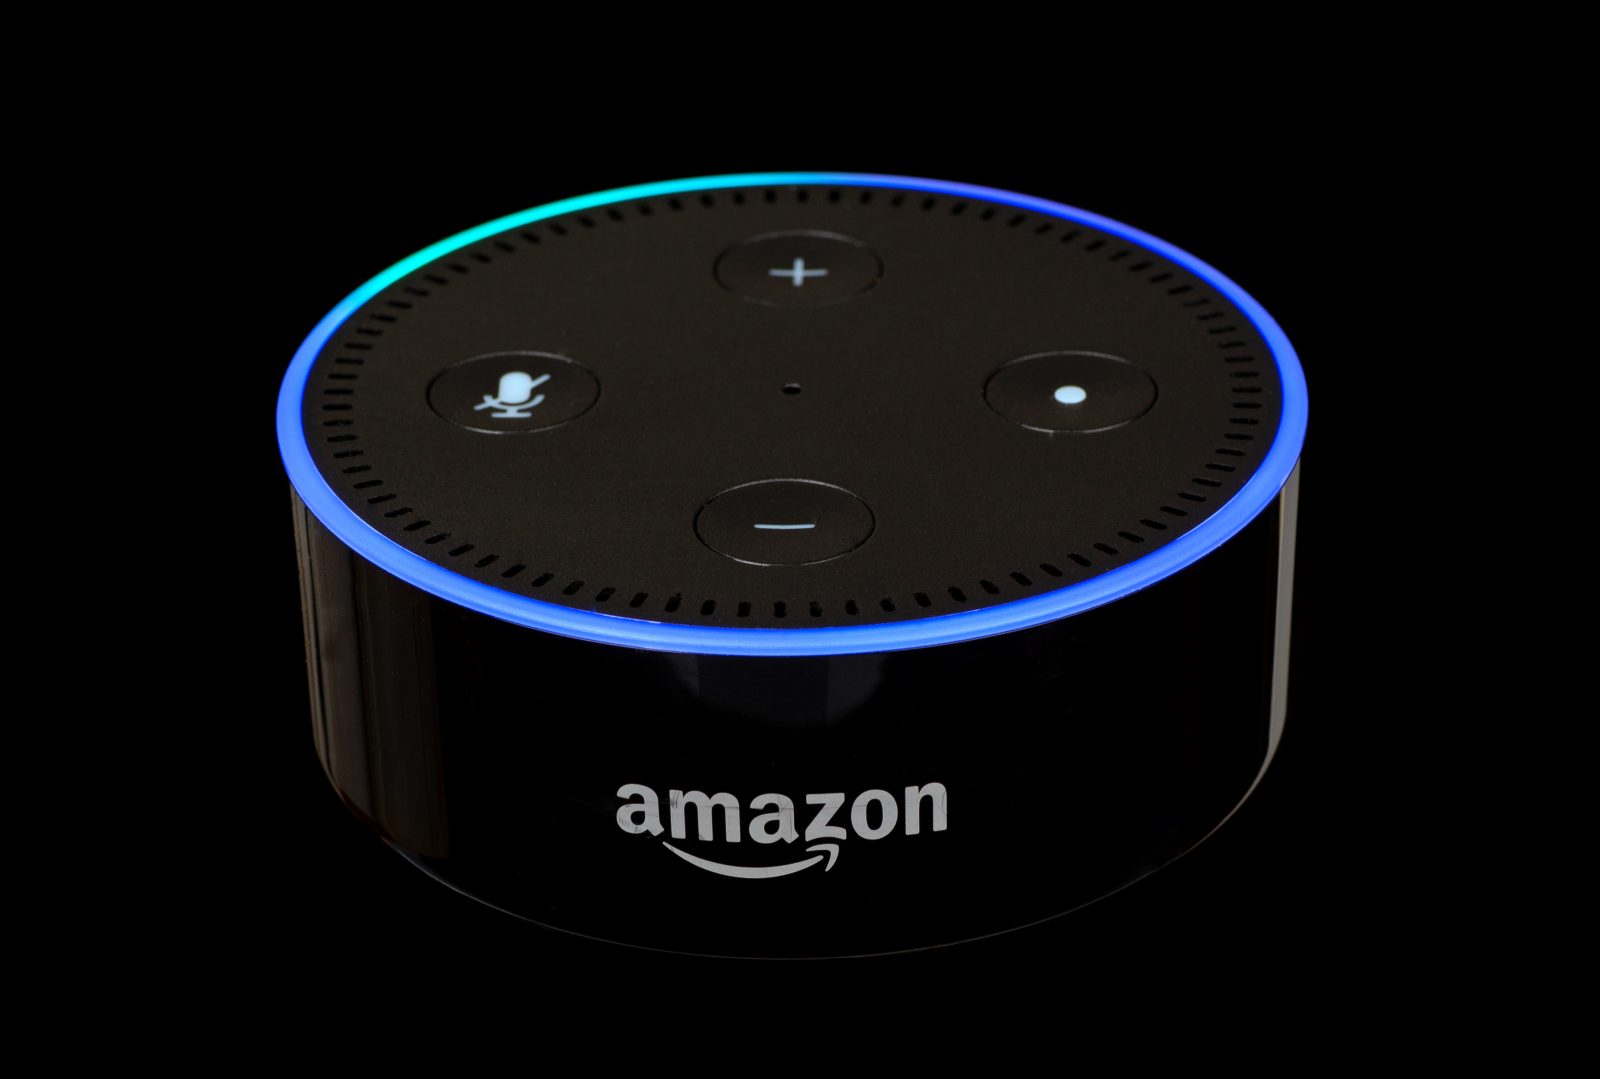 How Do I Use an Amazon Echo? (2018 Guide)